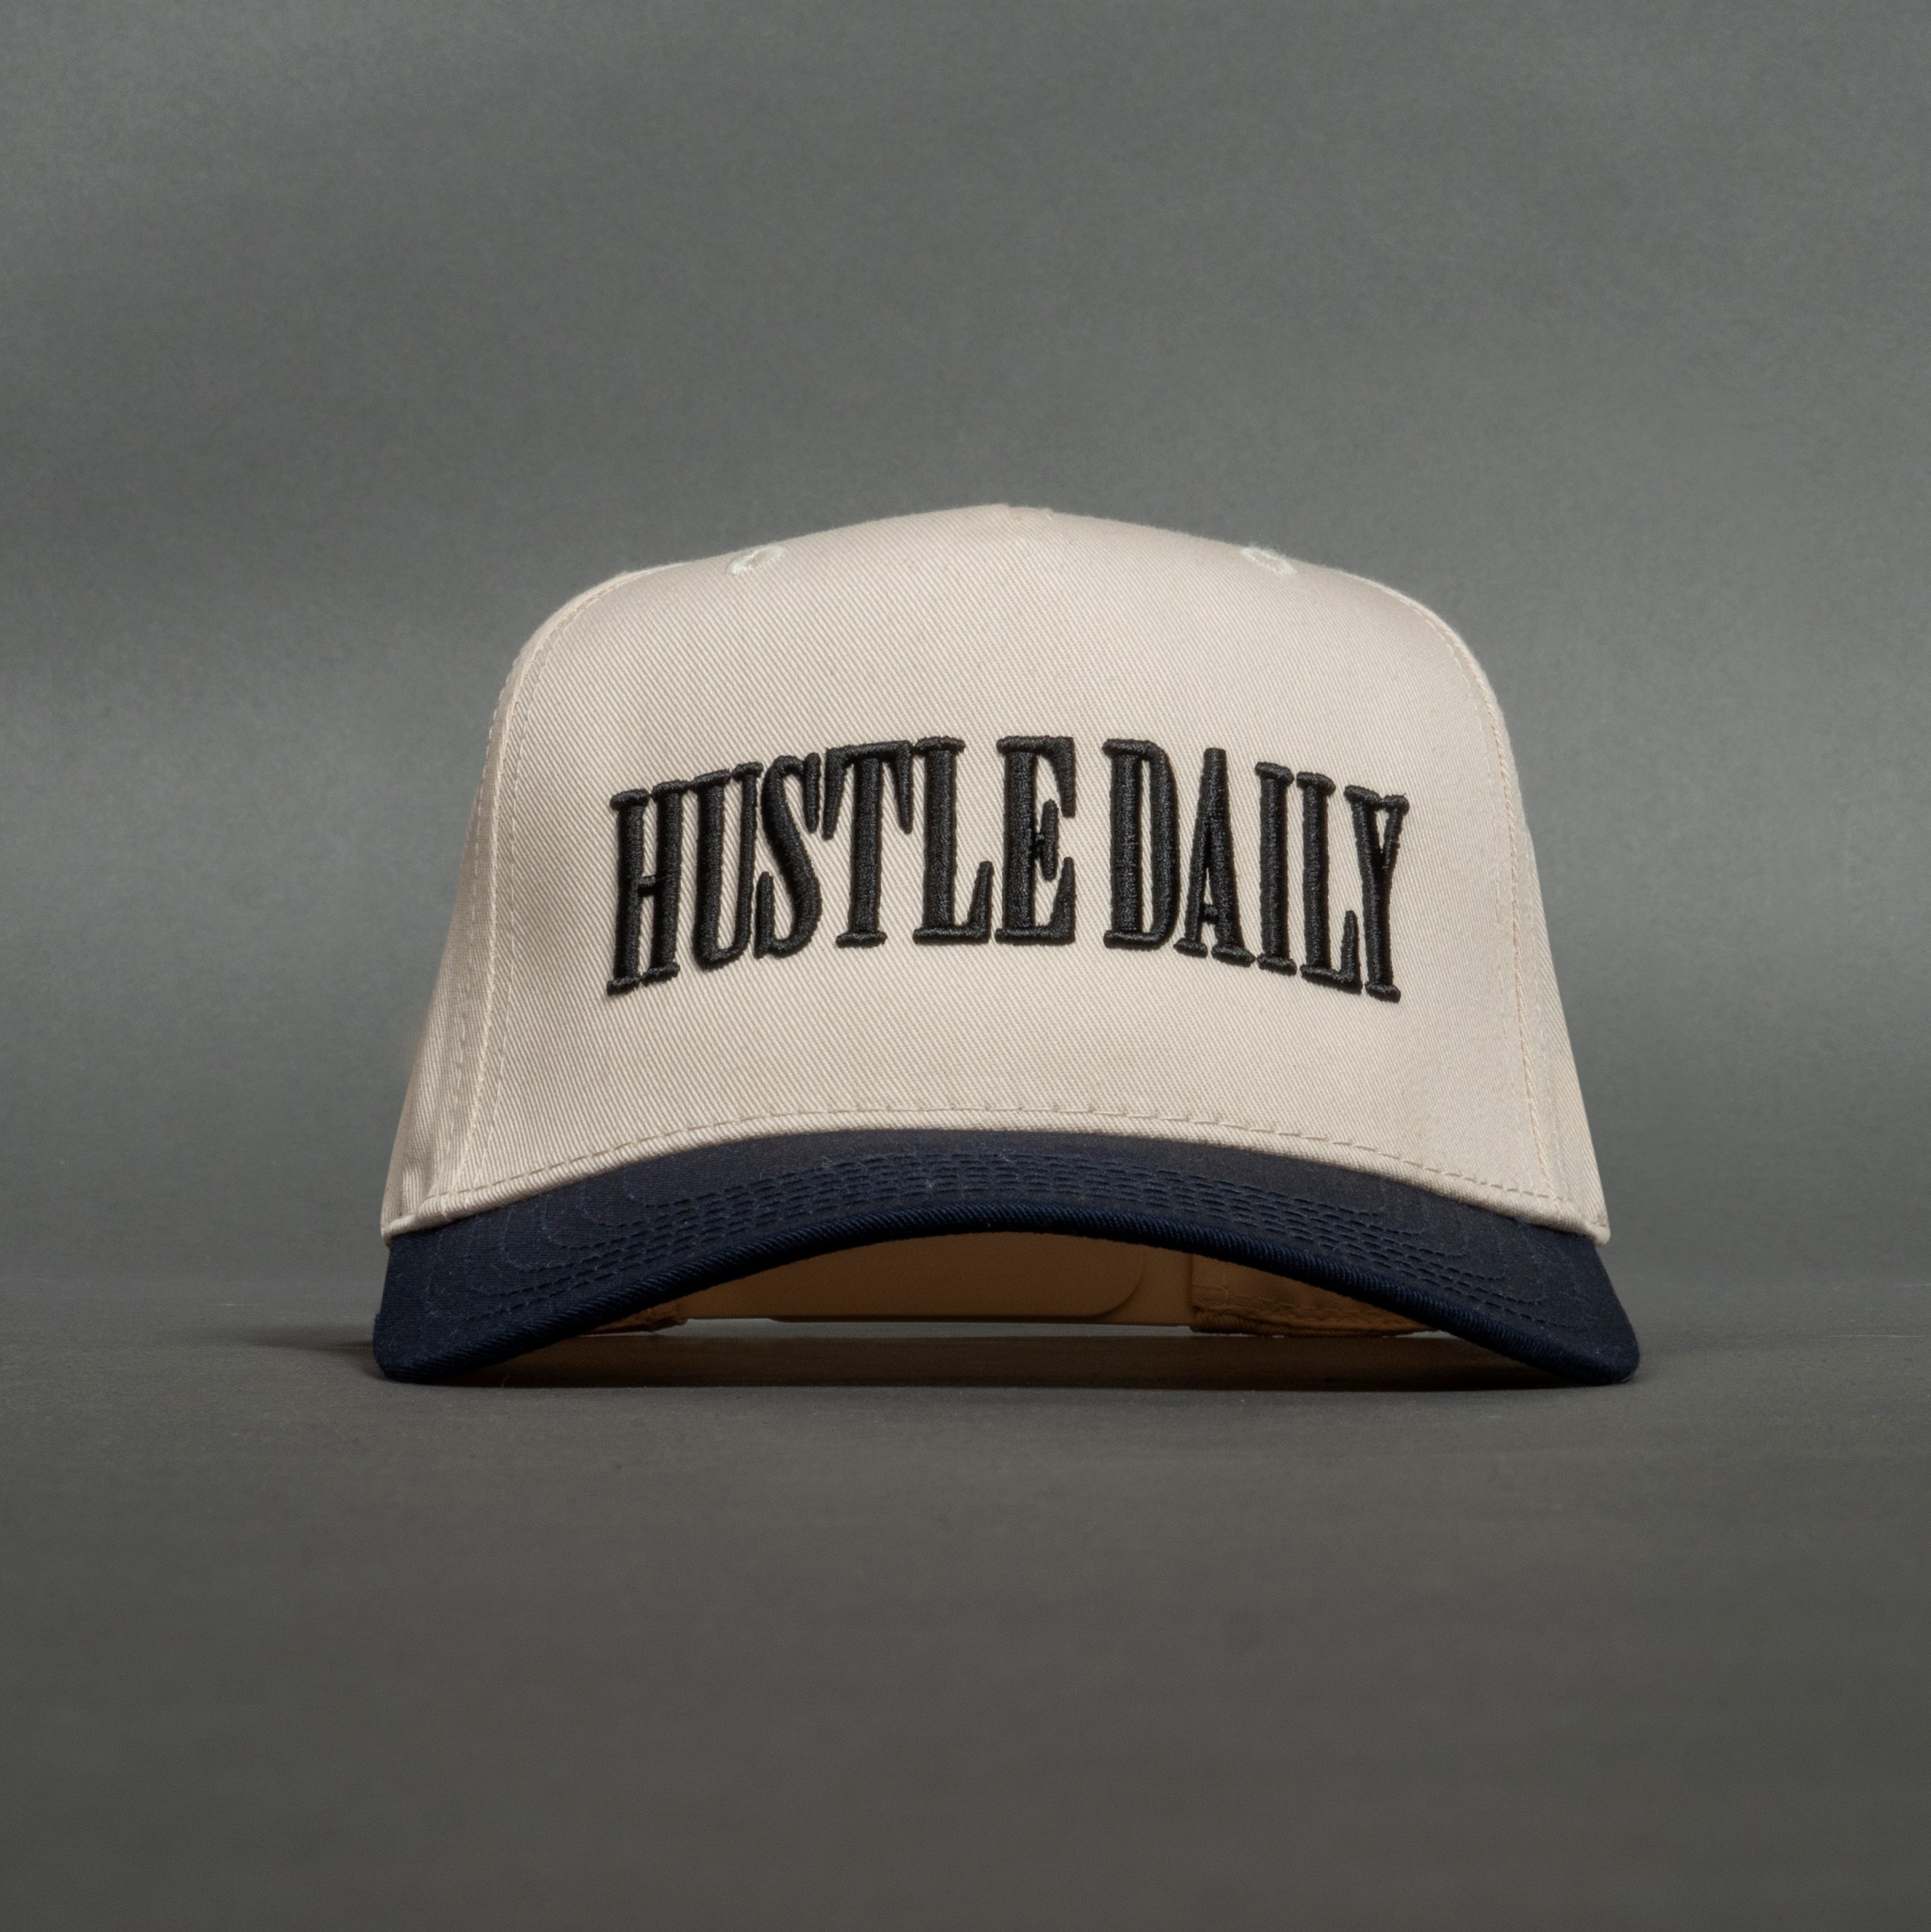 SM Hustle Daily Snapback